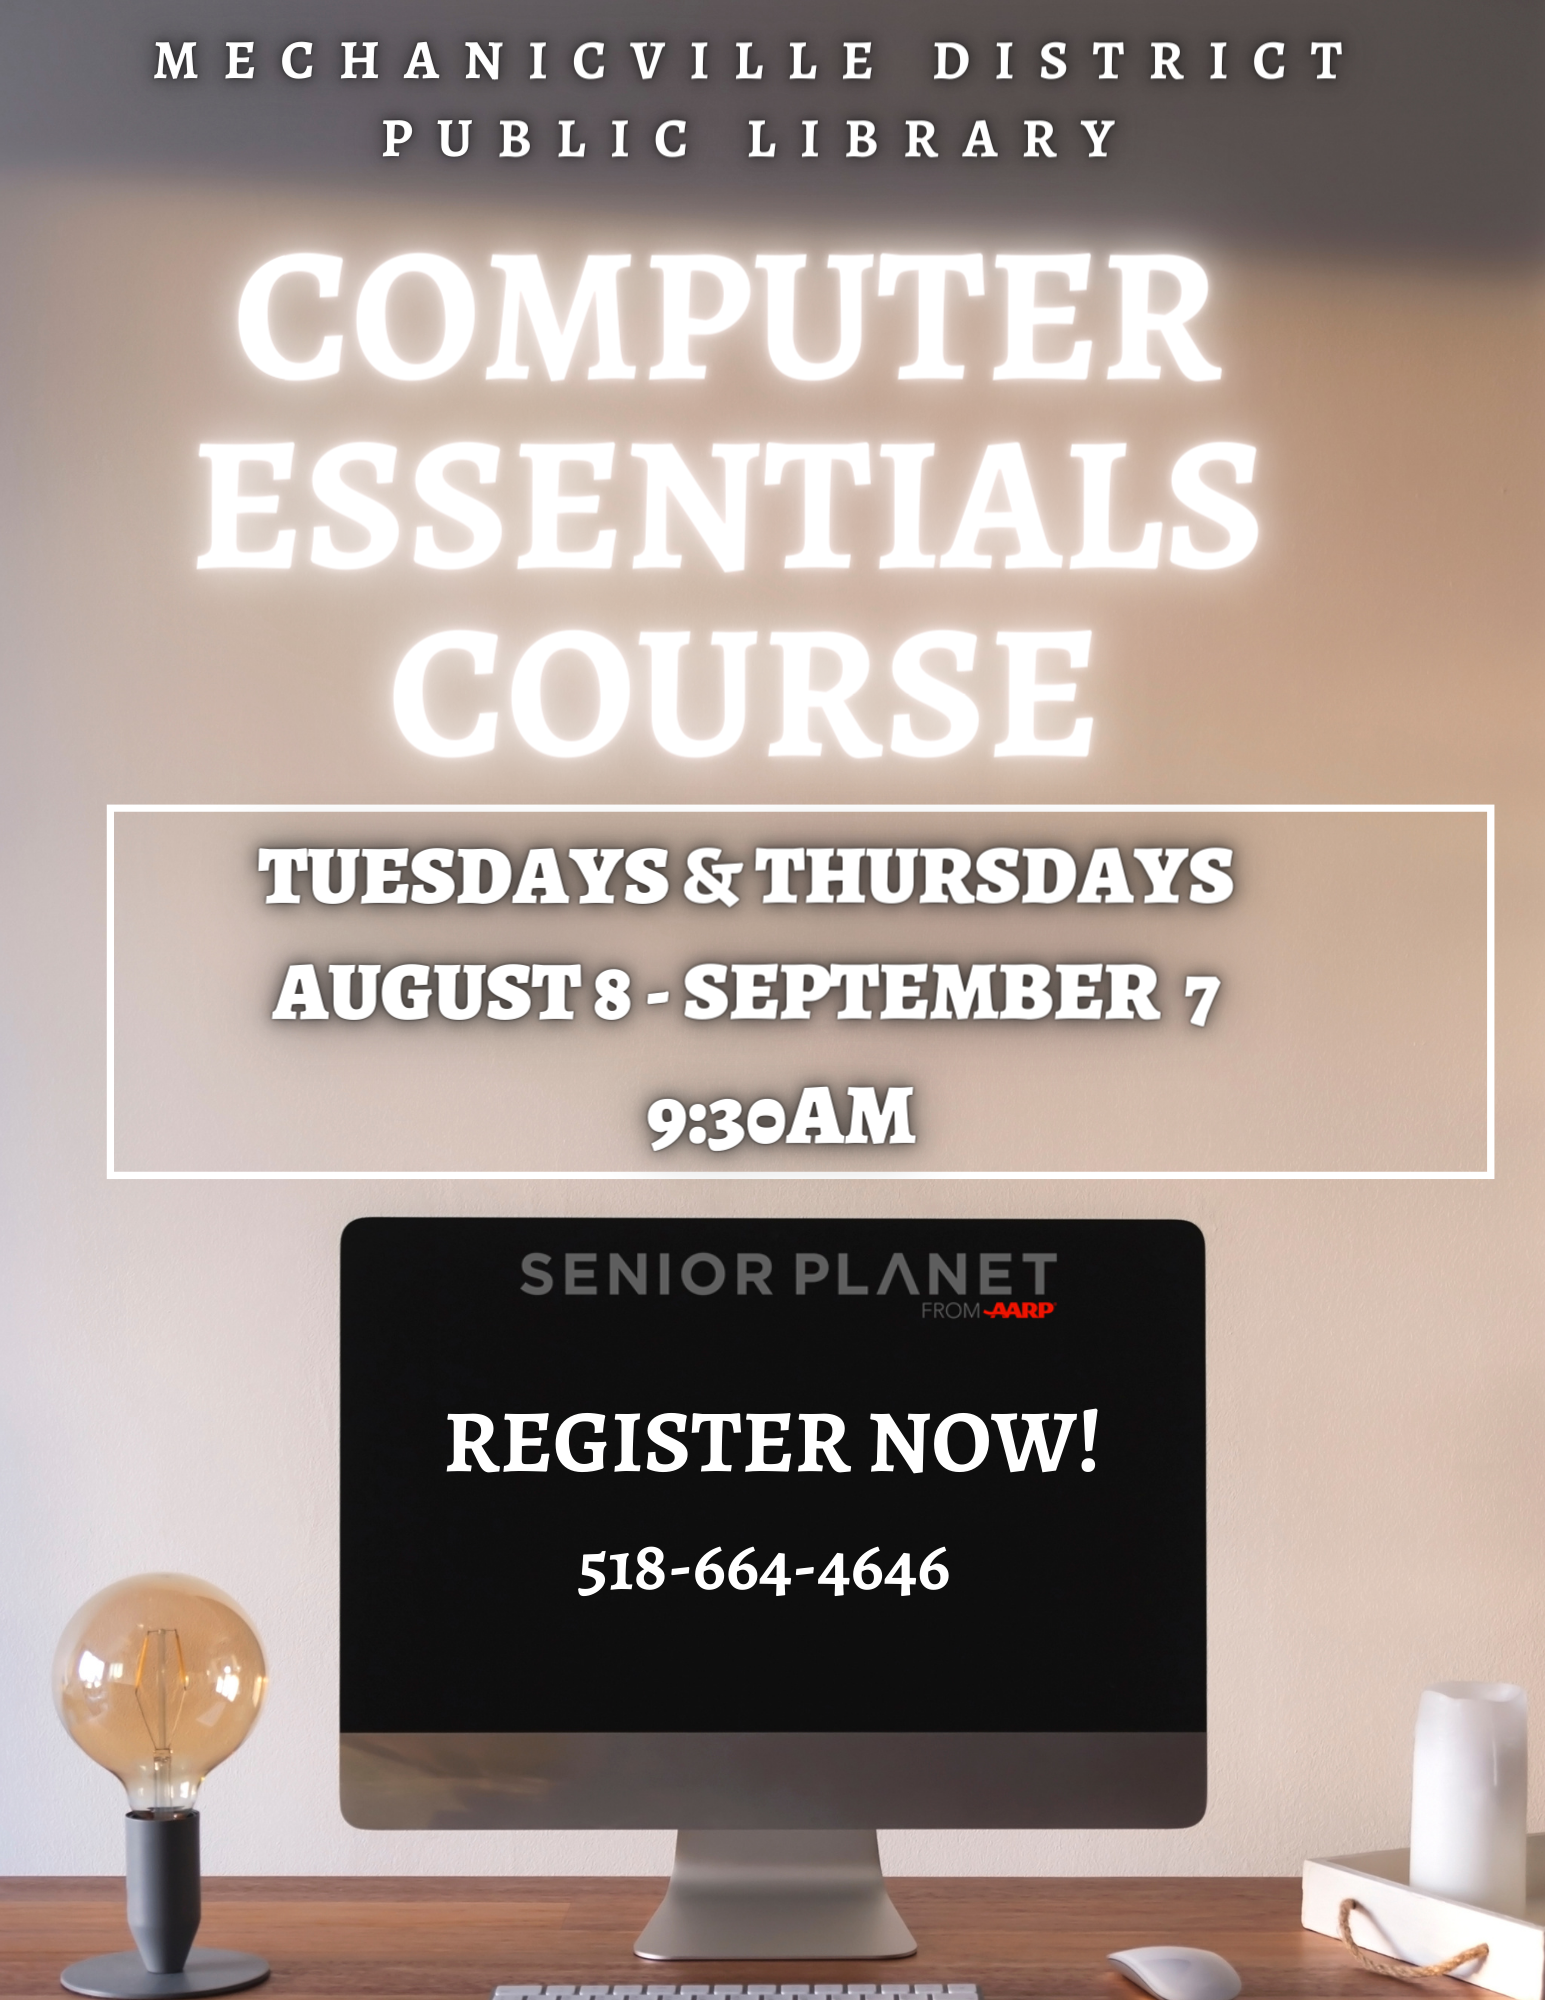 Free Senior Technology Course - Computer Essentials @ Mechanicville District Public Library